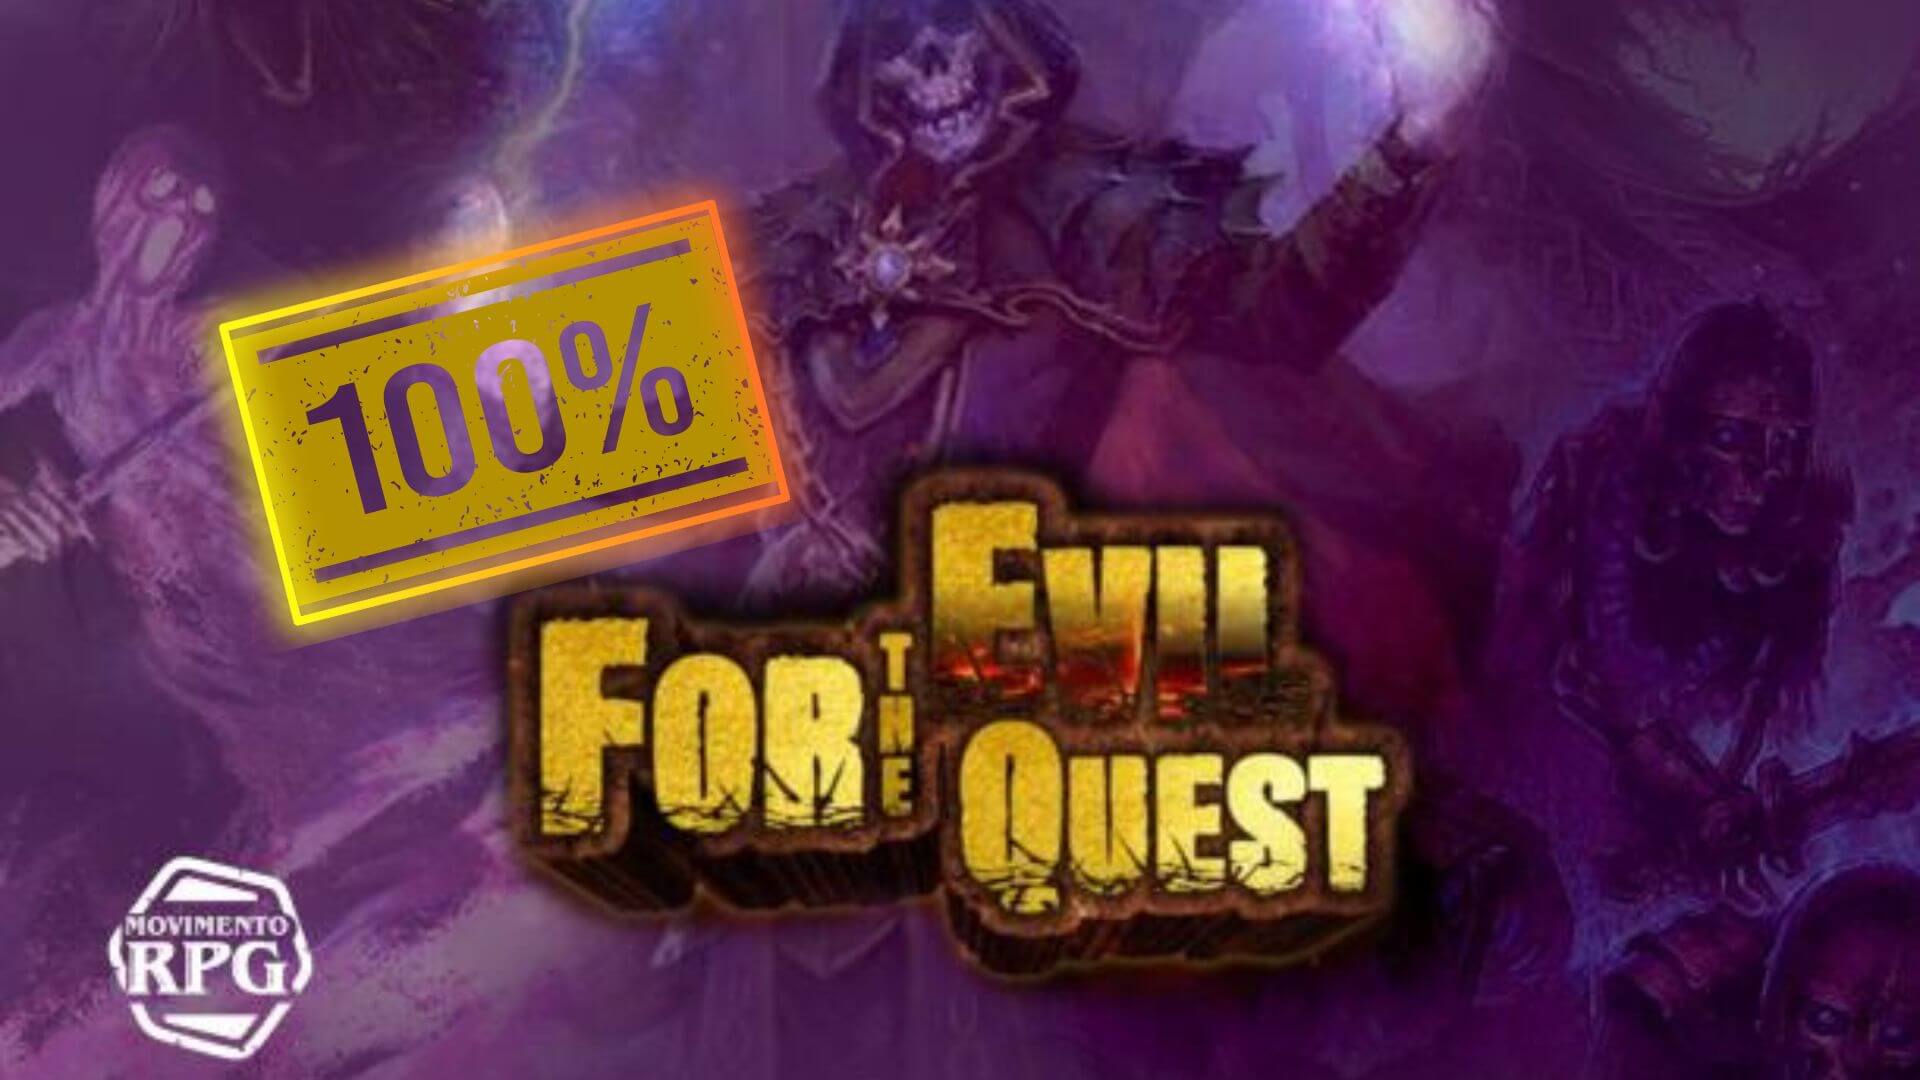 For the Evil Quest - Metas Batidas